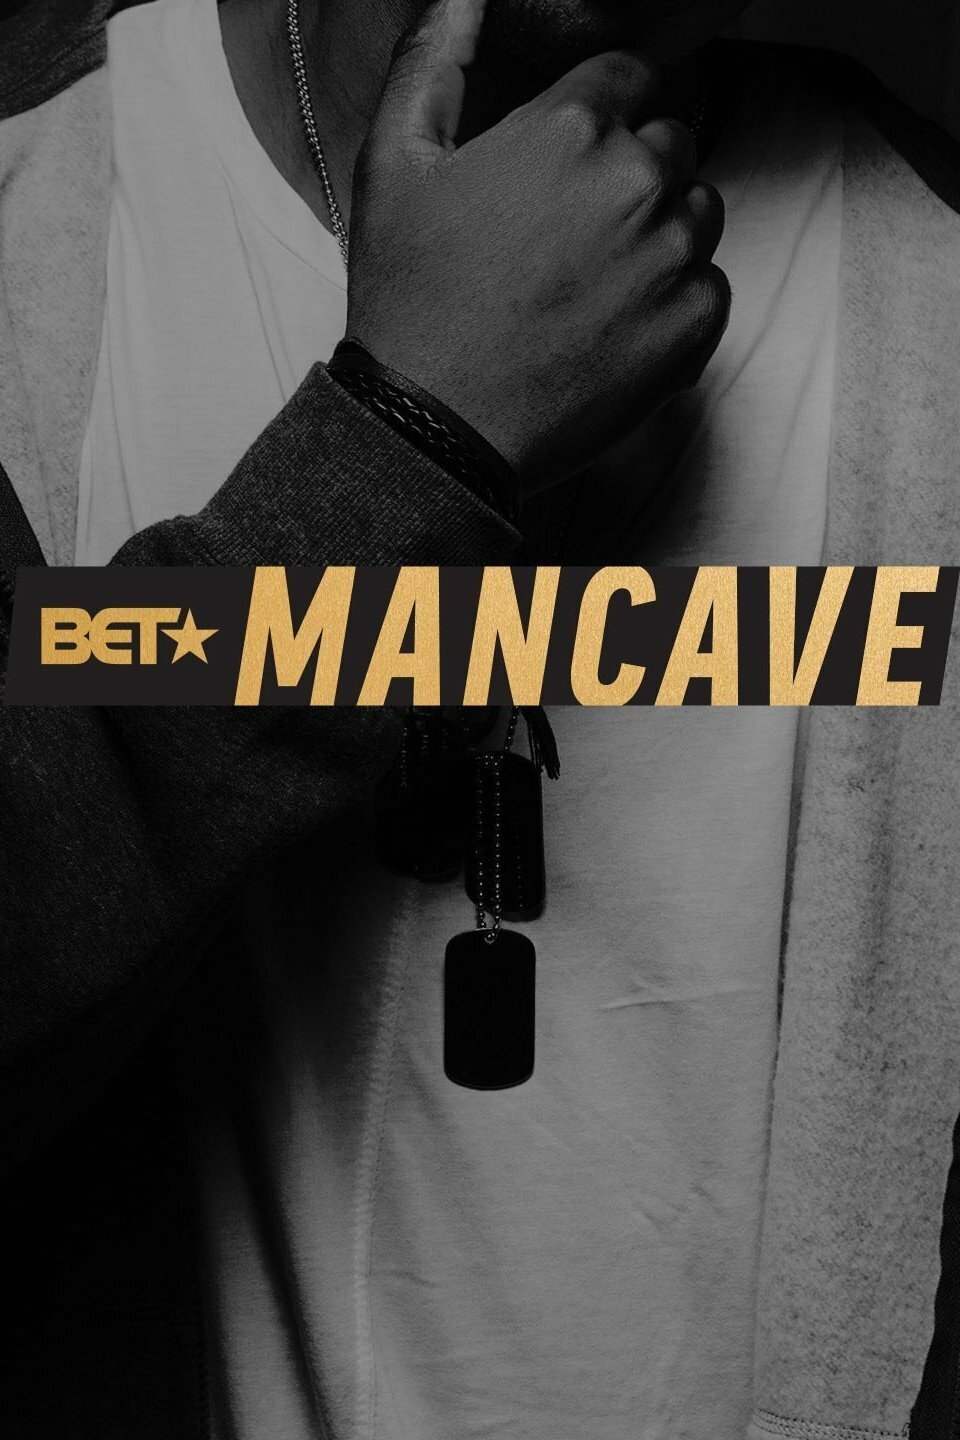 BET's Mancave ne zaman